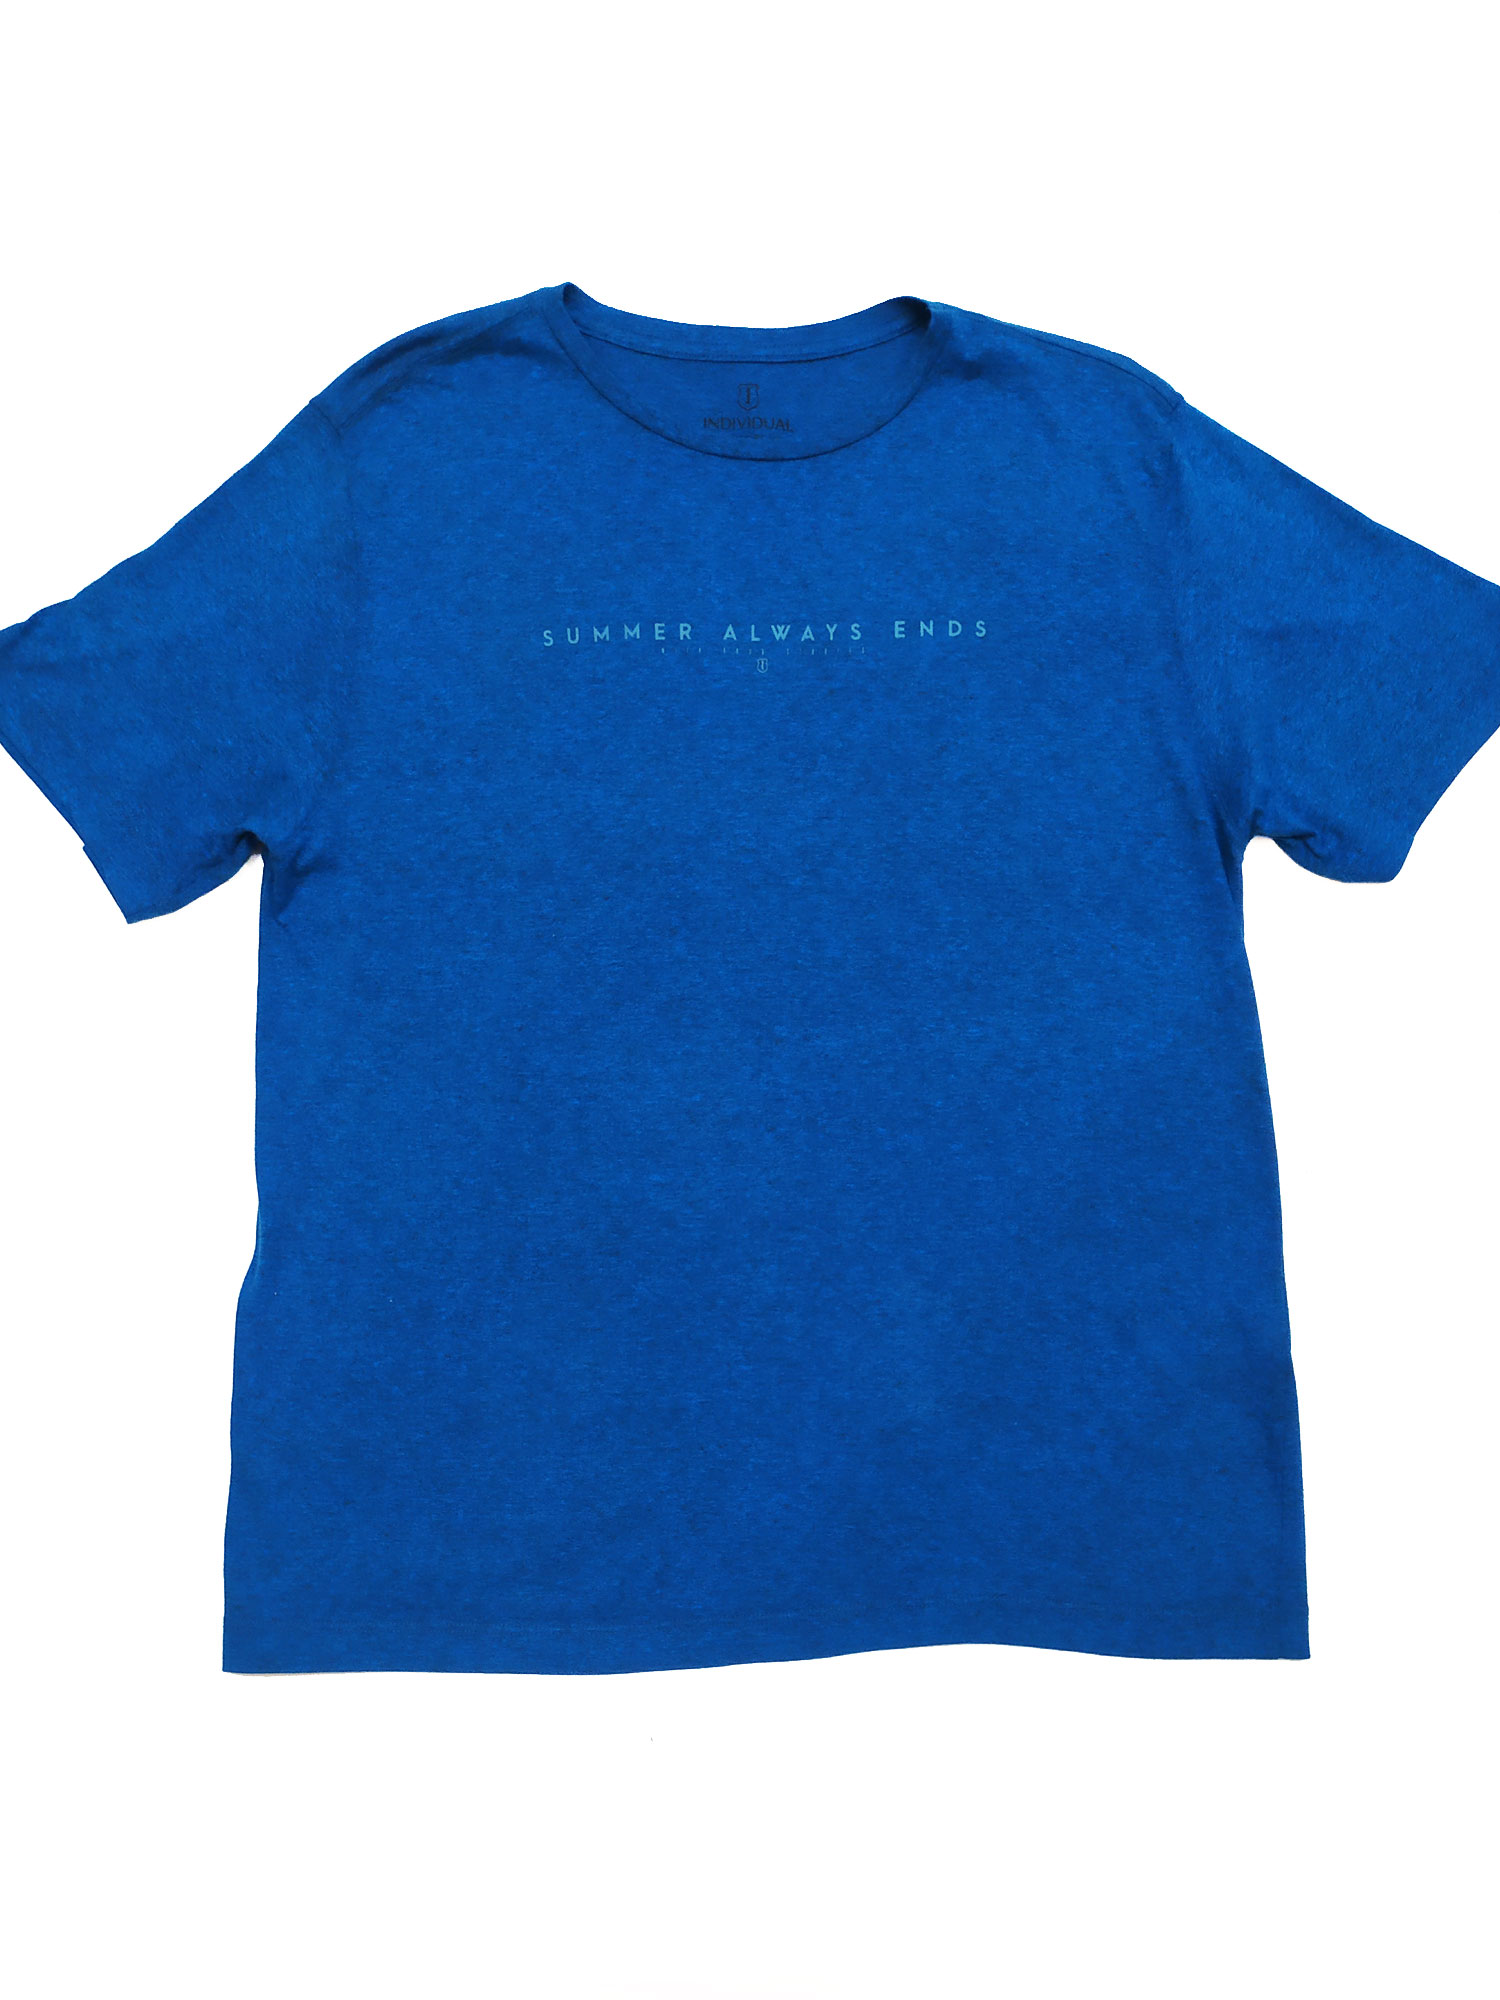 T-shirt Camiseta Comfort Fit Mesclada Individual